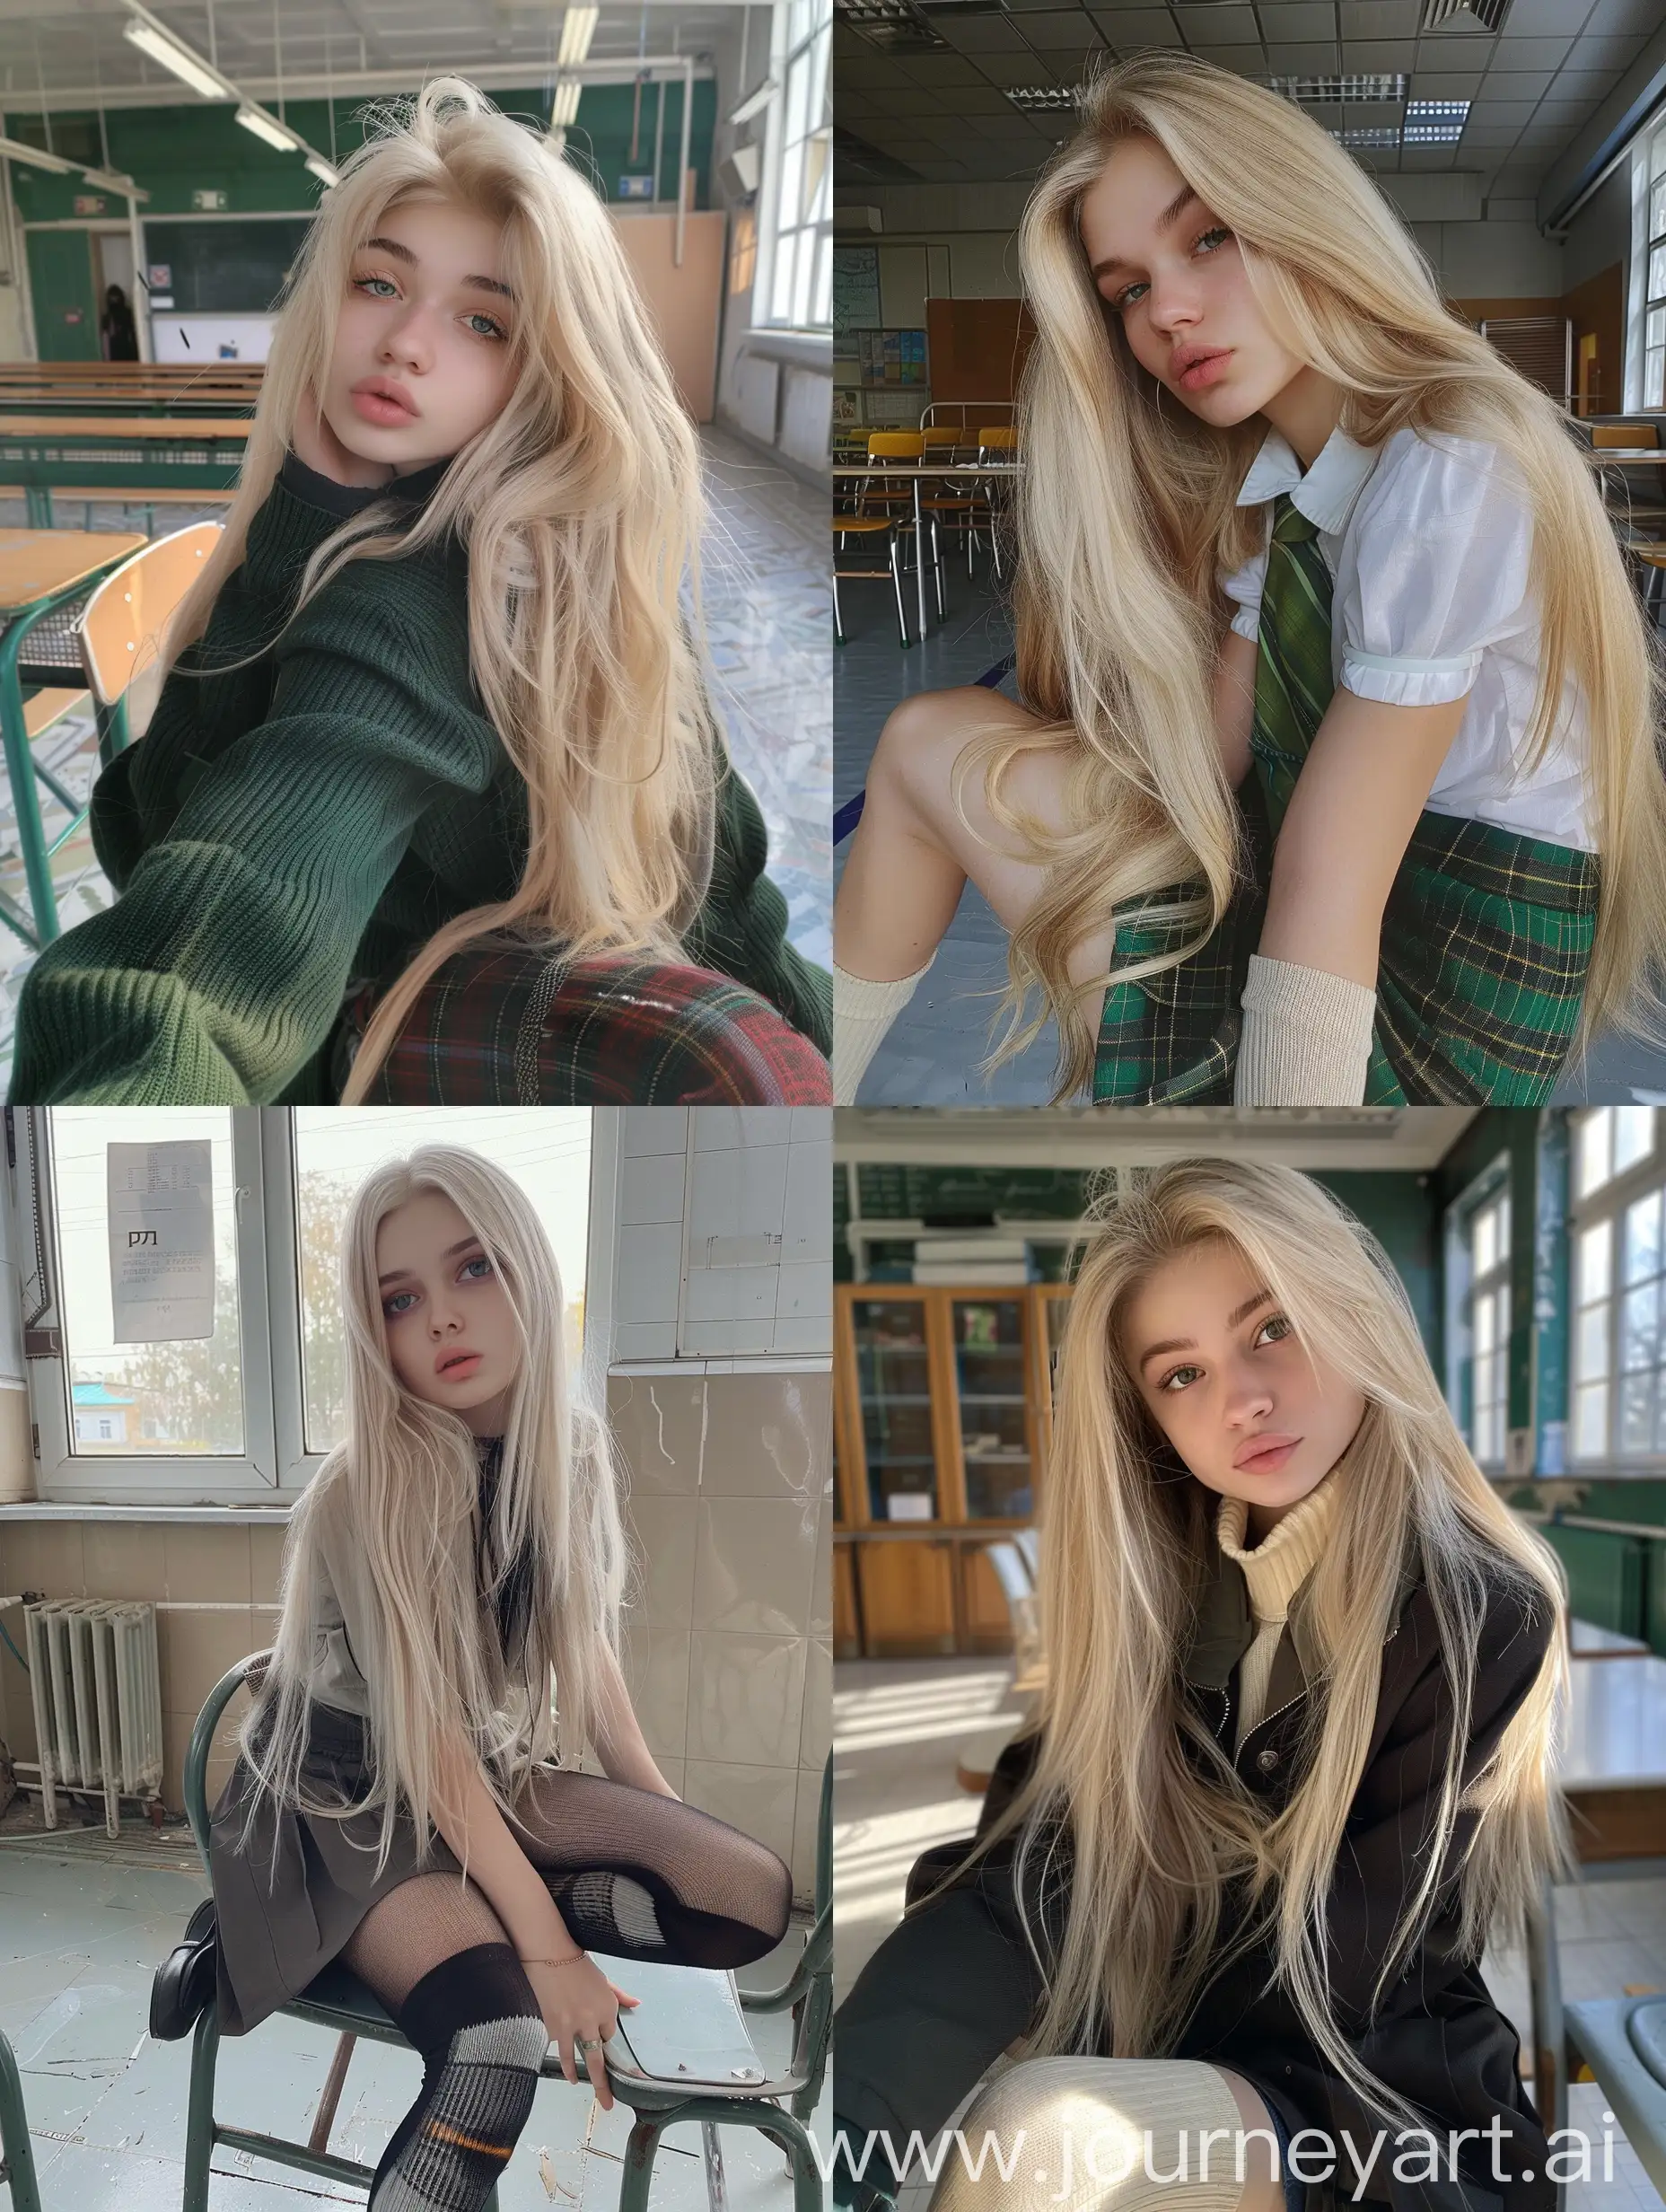 Young-Ukrainian-Influencer-Girl-in-School-Uniform-Taking-Natural-Selfie-with-iPhone